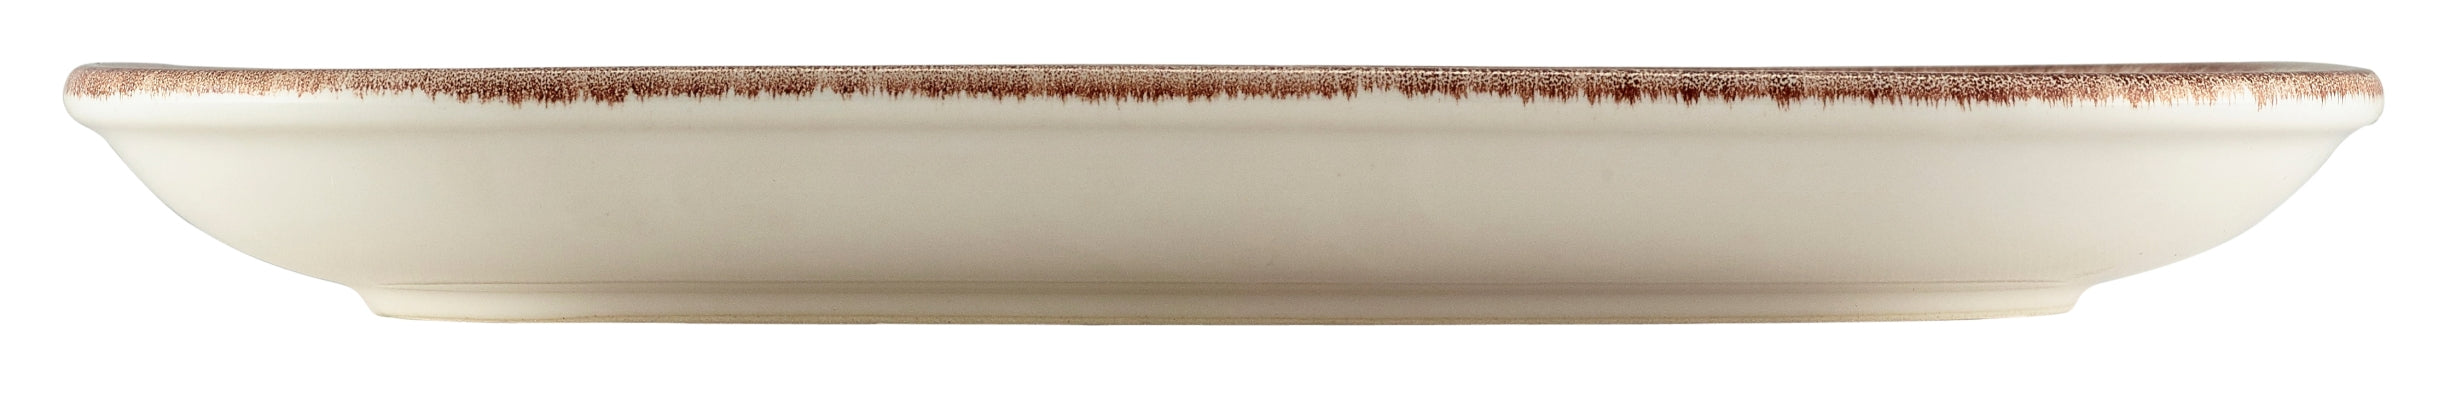 Terra Stoneware Sereno Brown Rectangular Plate 29 x 19.5cm